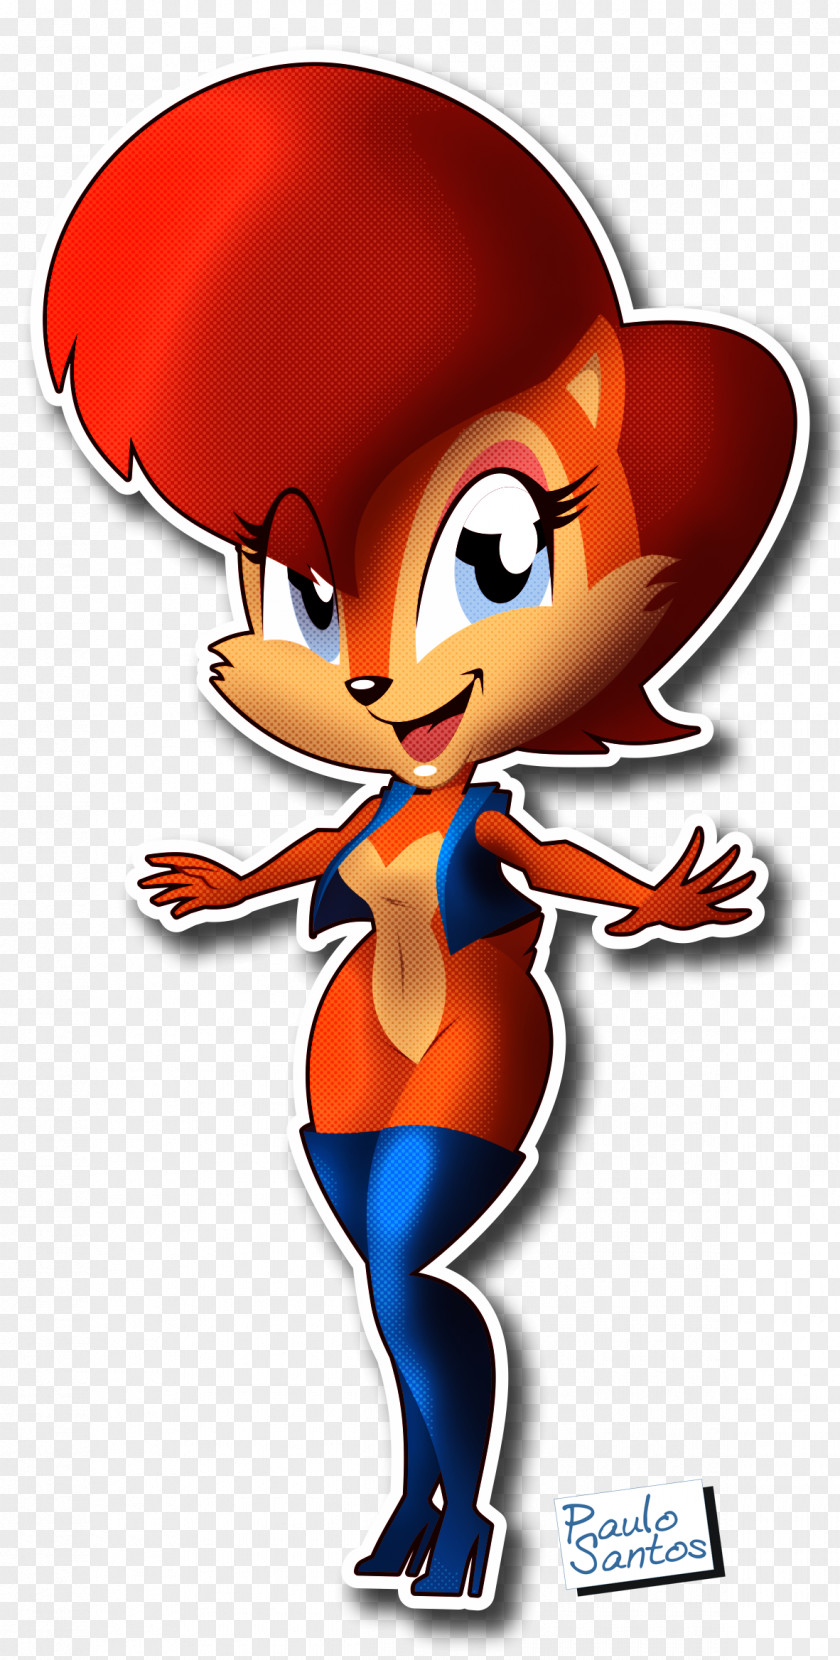 Sonic The Hedgehog Princess Sally Acorn Clip Art Illustration PNG